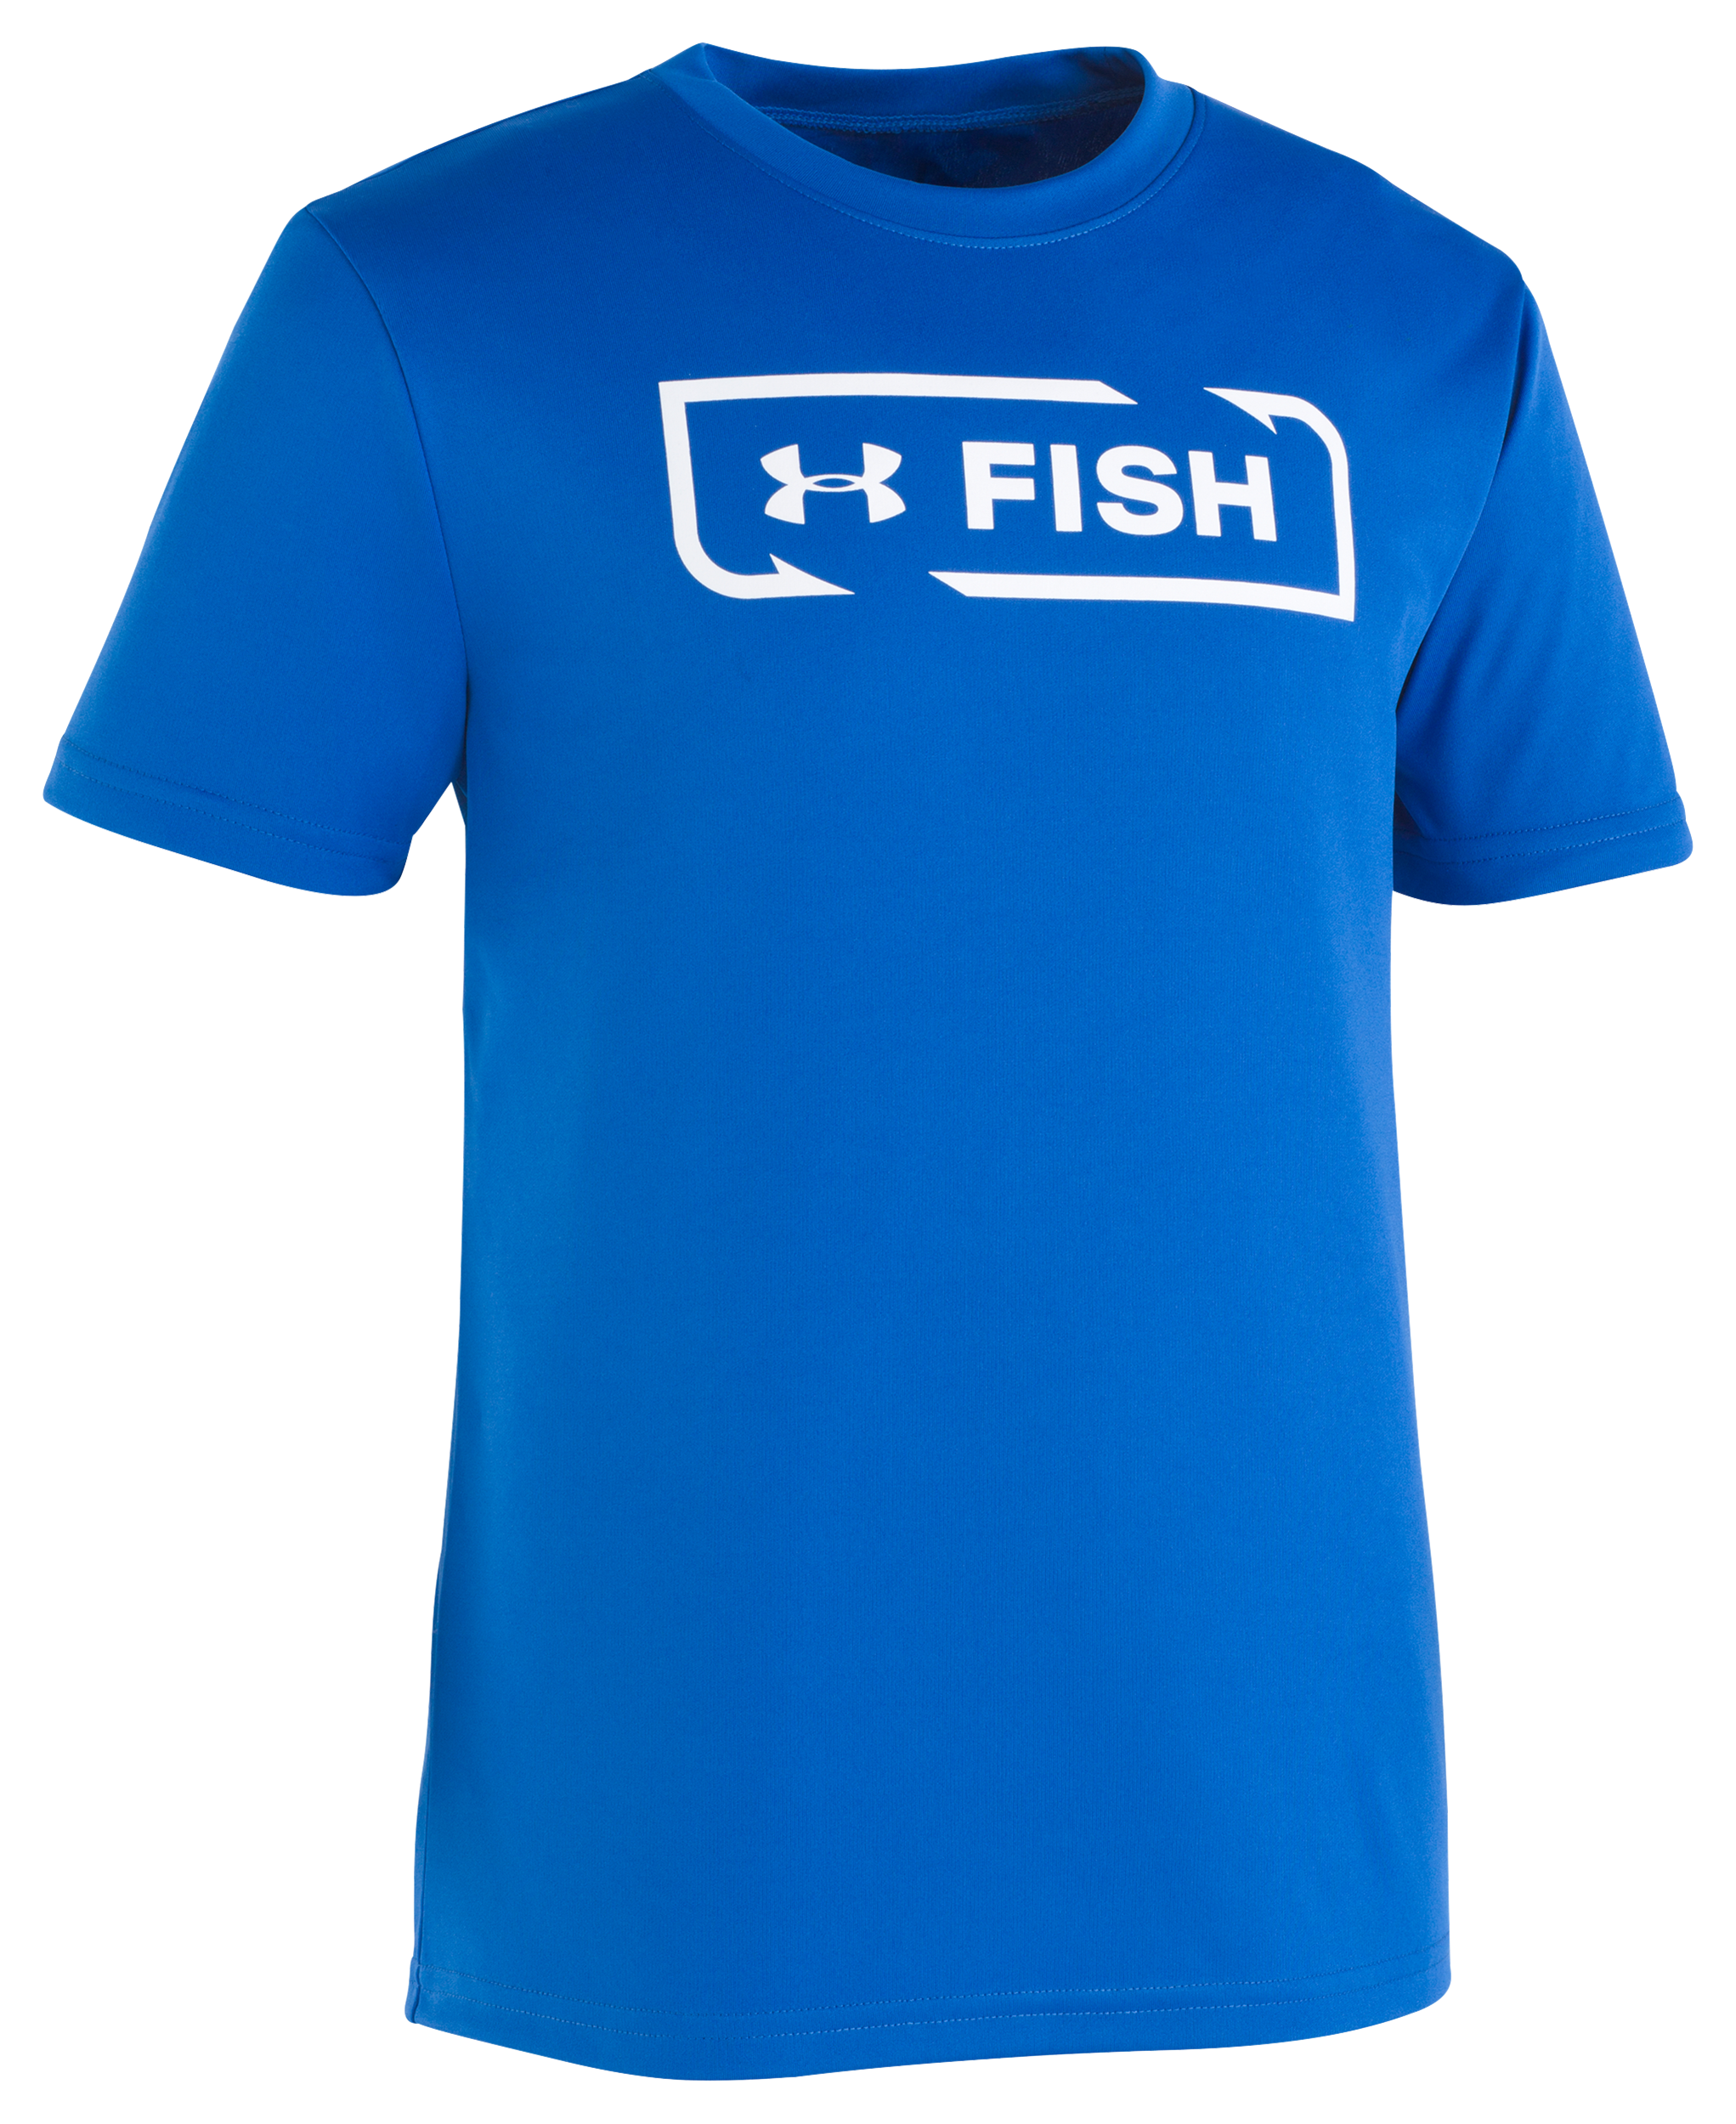 Under Armour Men's Fish Strike T Shirt